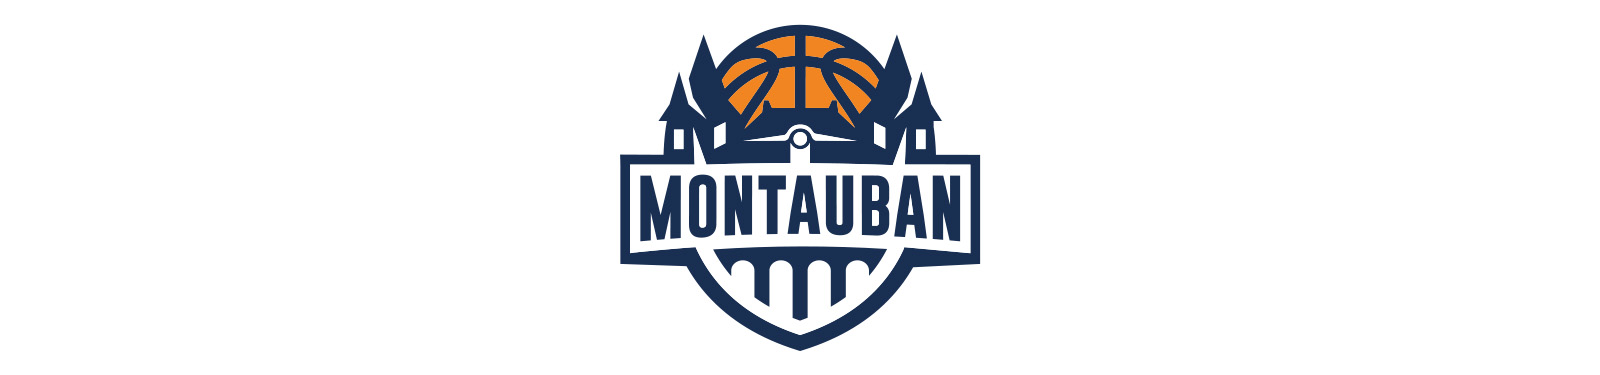 Montauban Basket Club